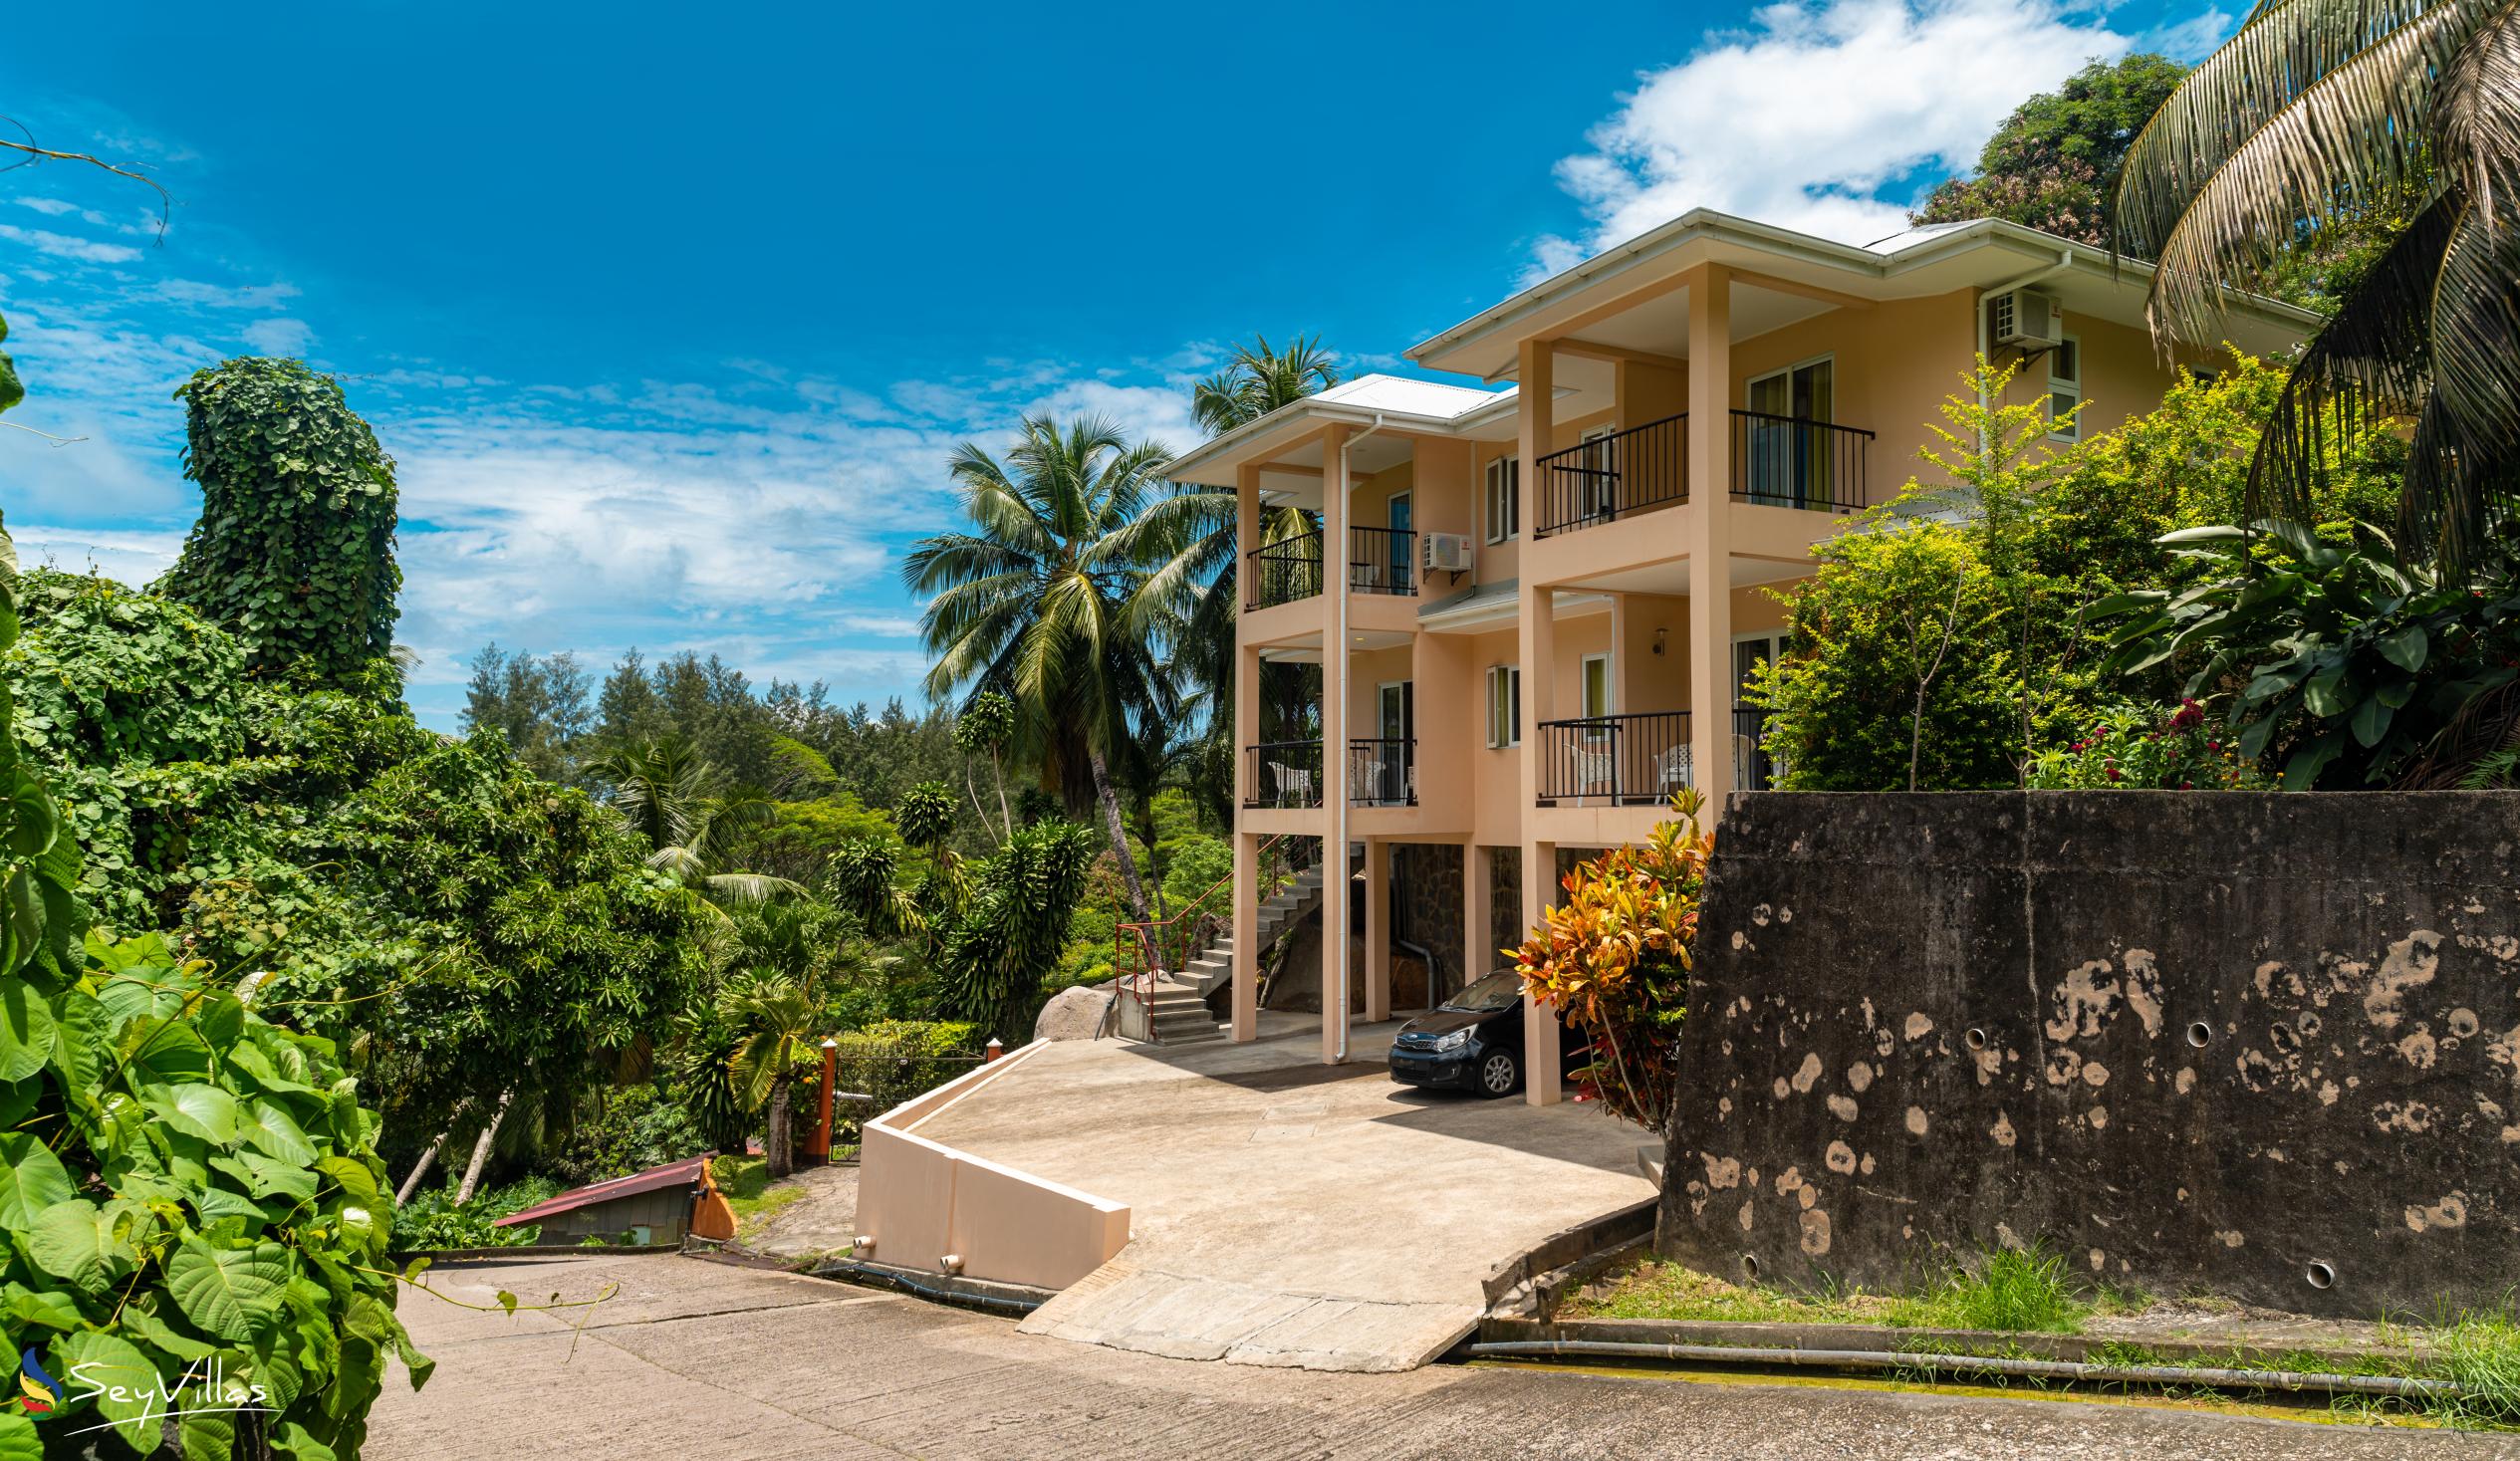 Foto 4: JAIDSS Holiday Apartments - Aussenbereich - Mahé (Seychellen)